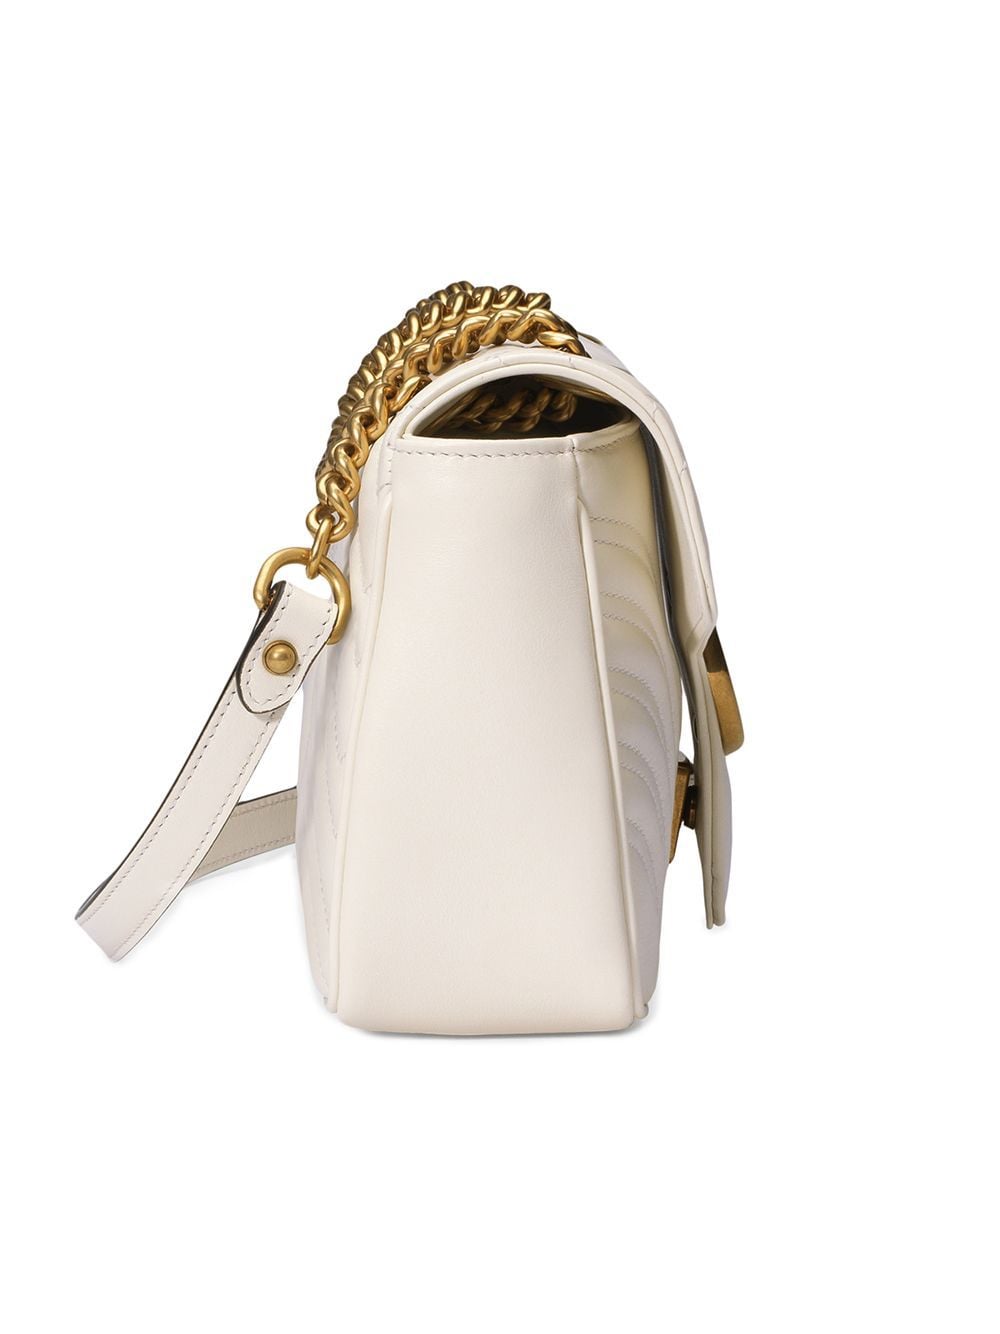 Gucci Mini GG Marmont Shoulder Bag - Farfetch